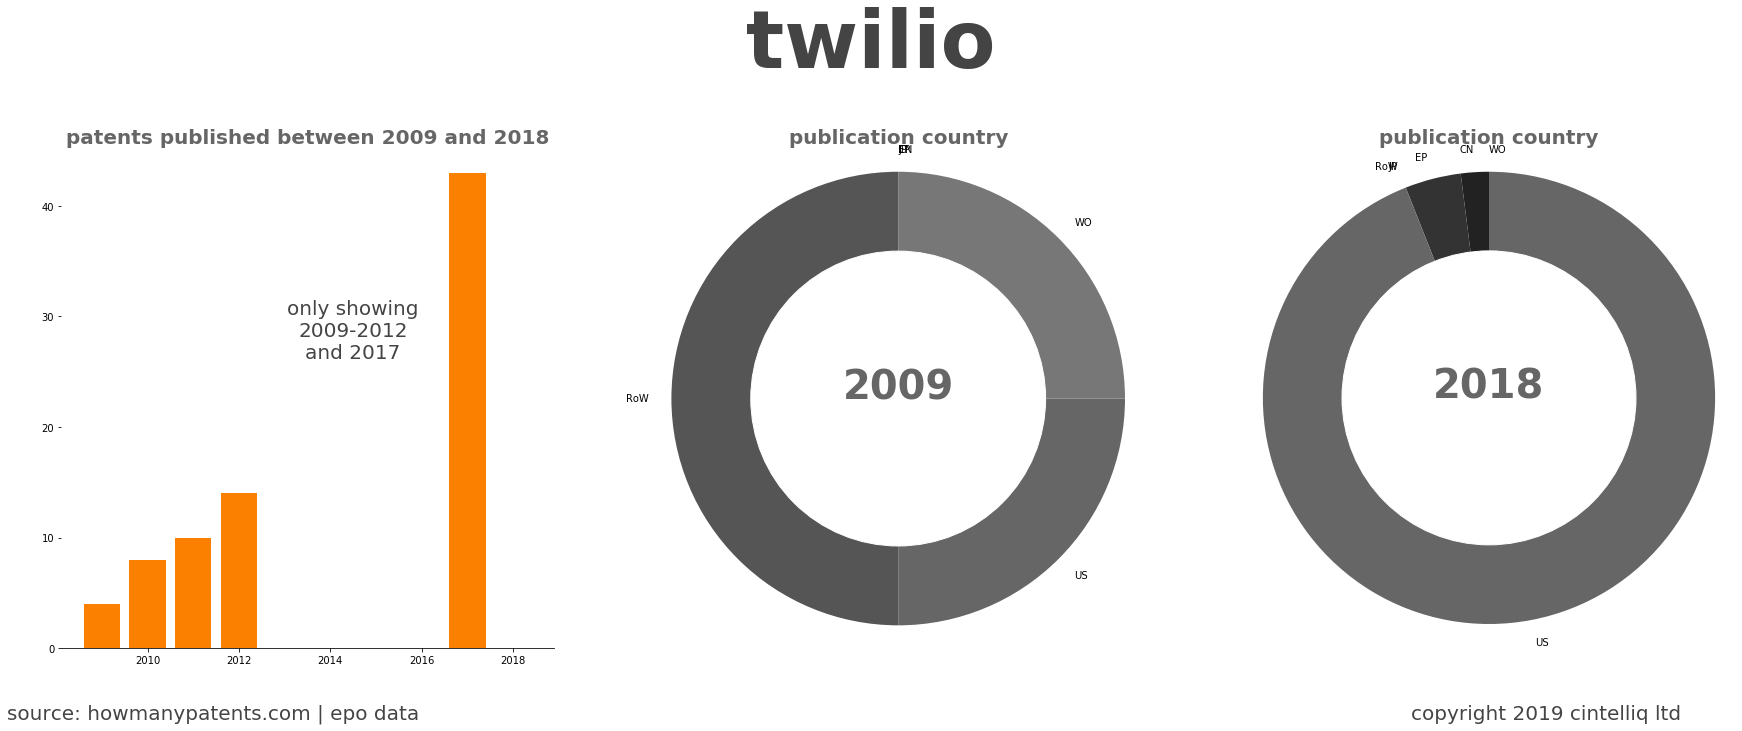 summary of patents for Twilio